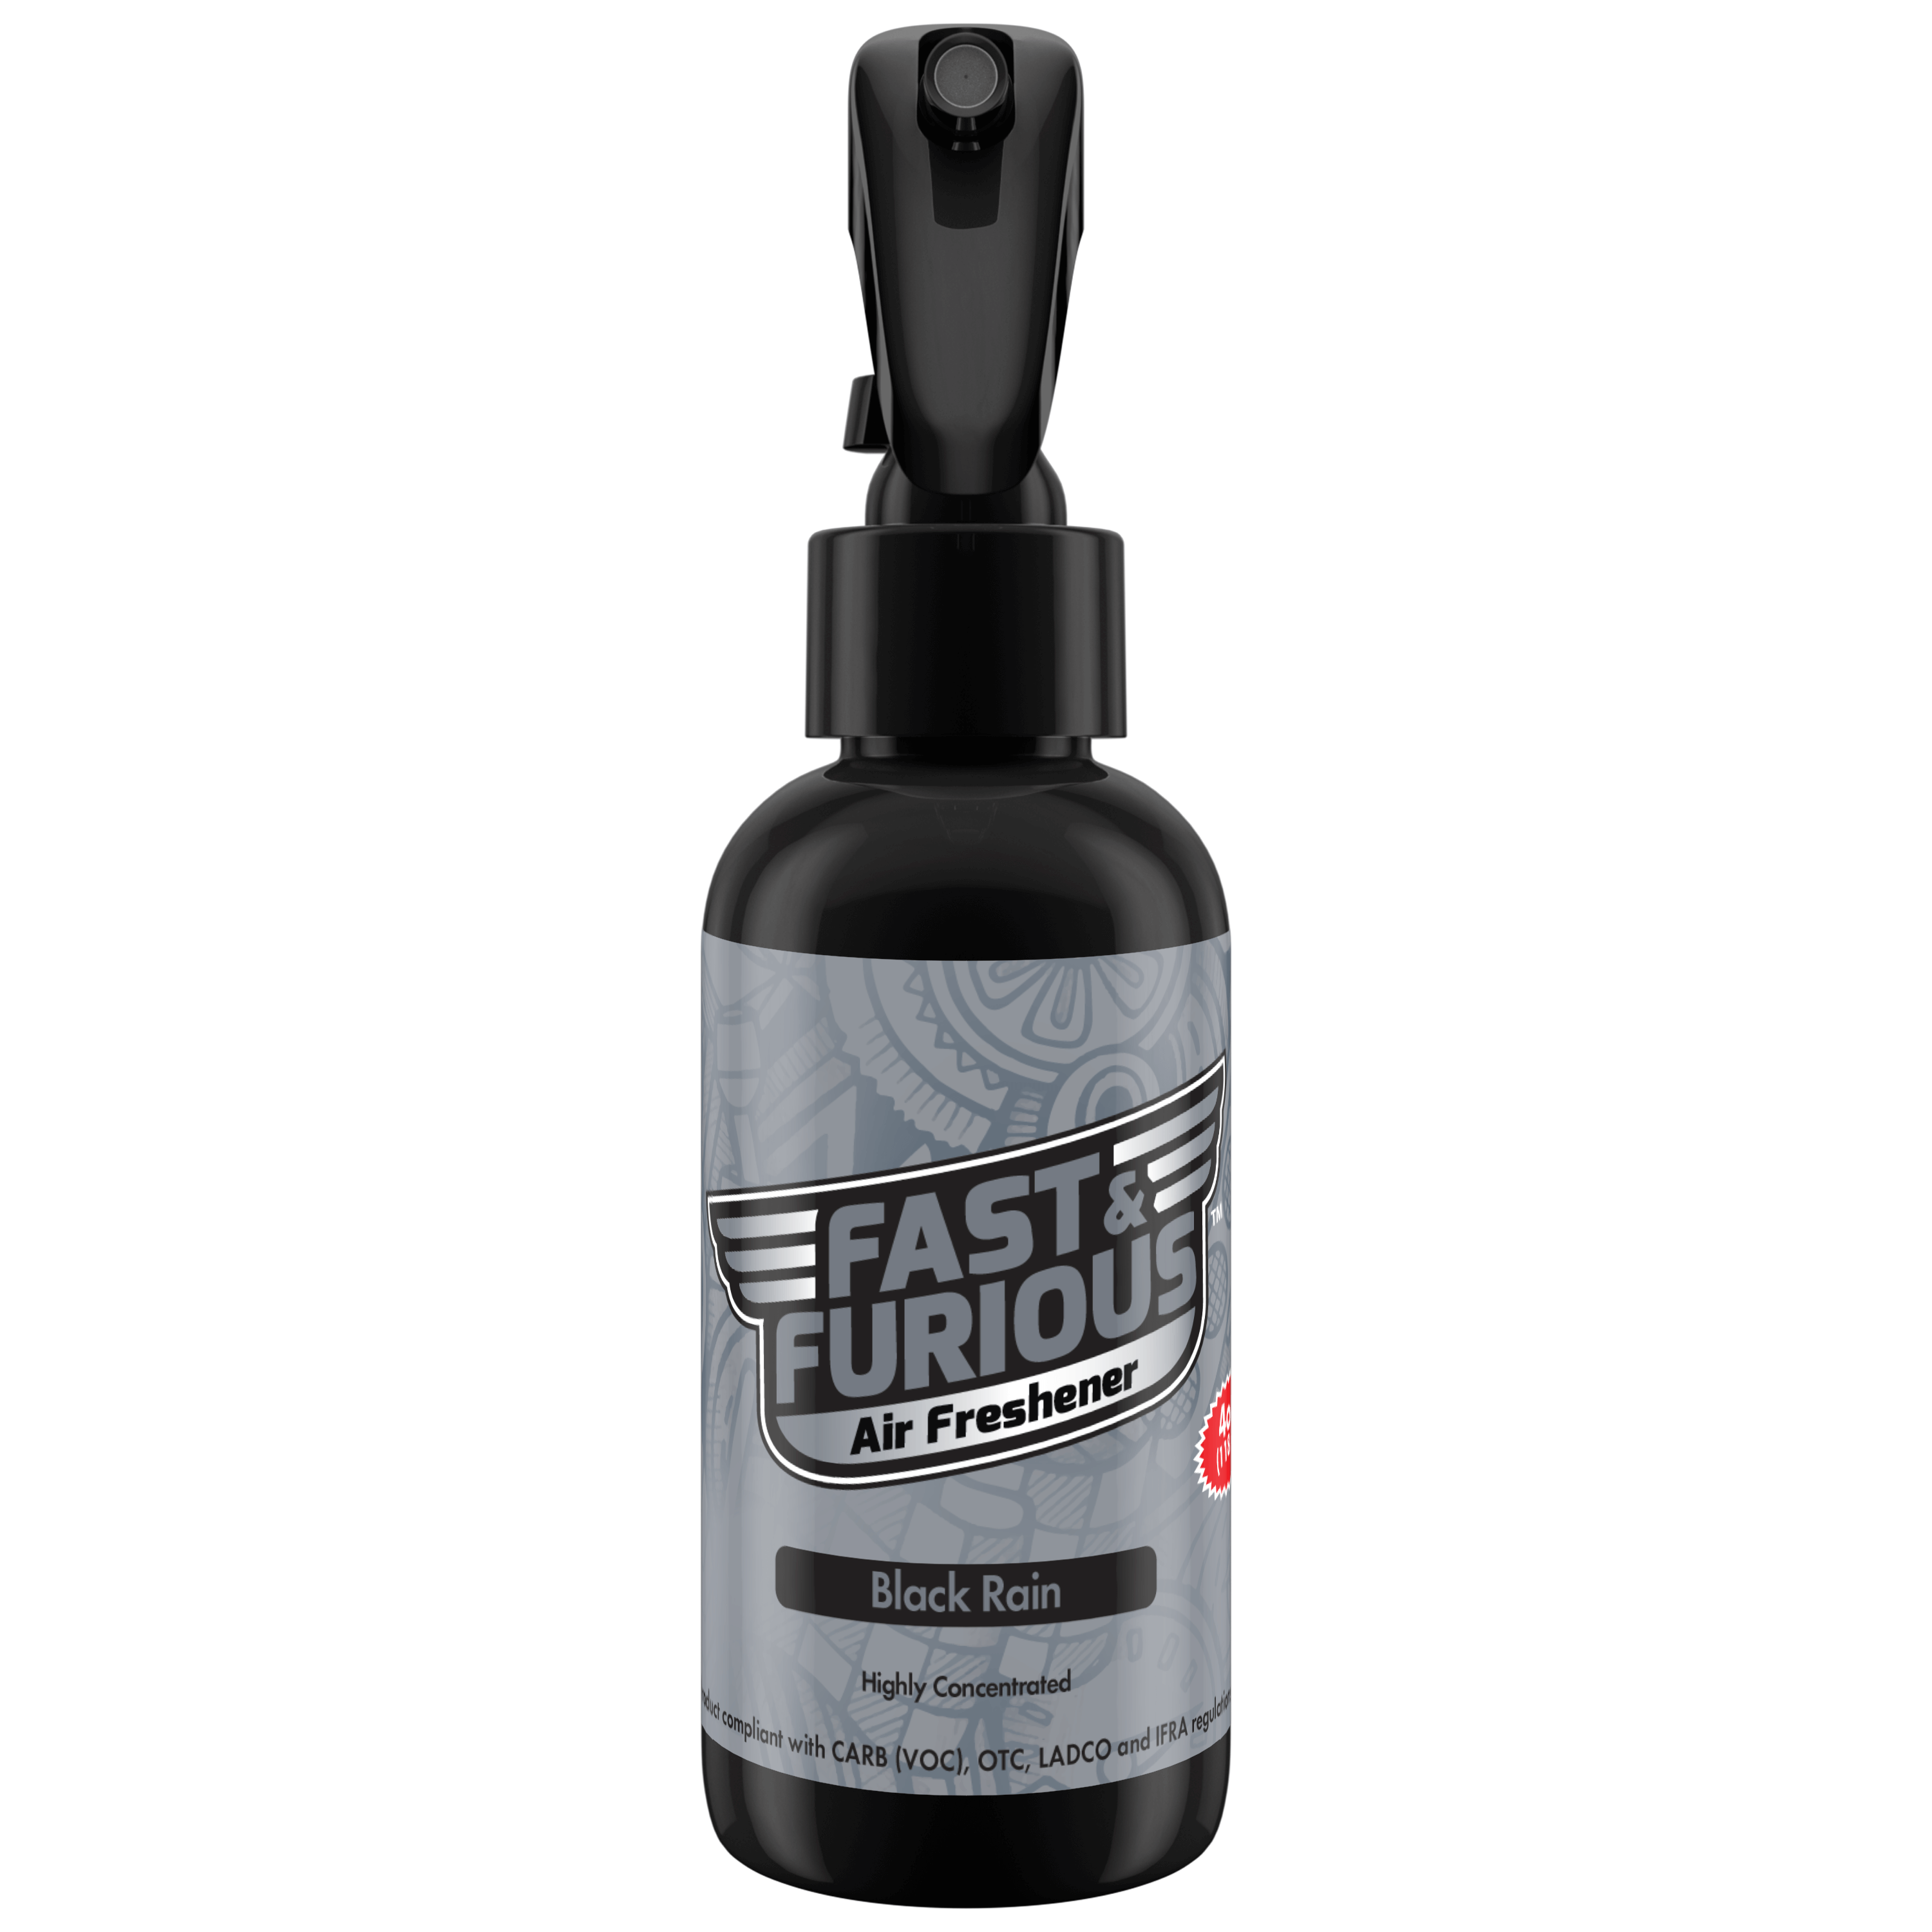 Fast and Furious Air Freshener - Black Rain Scent